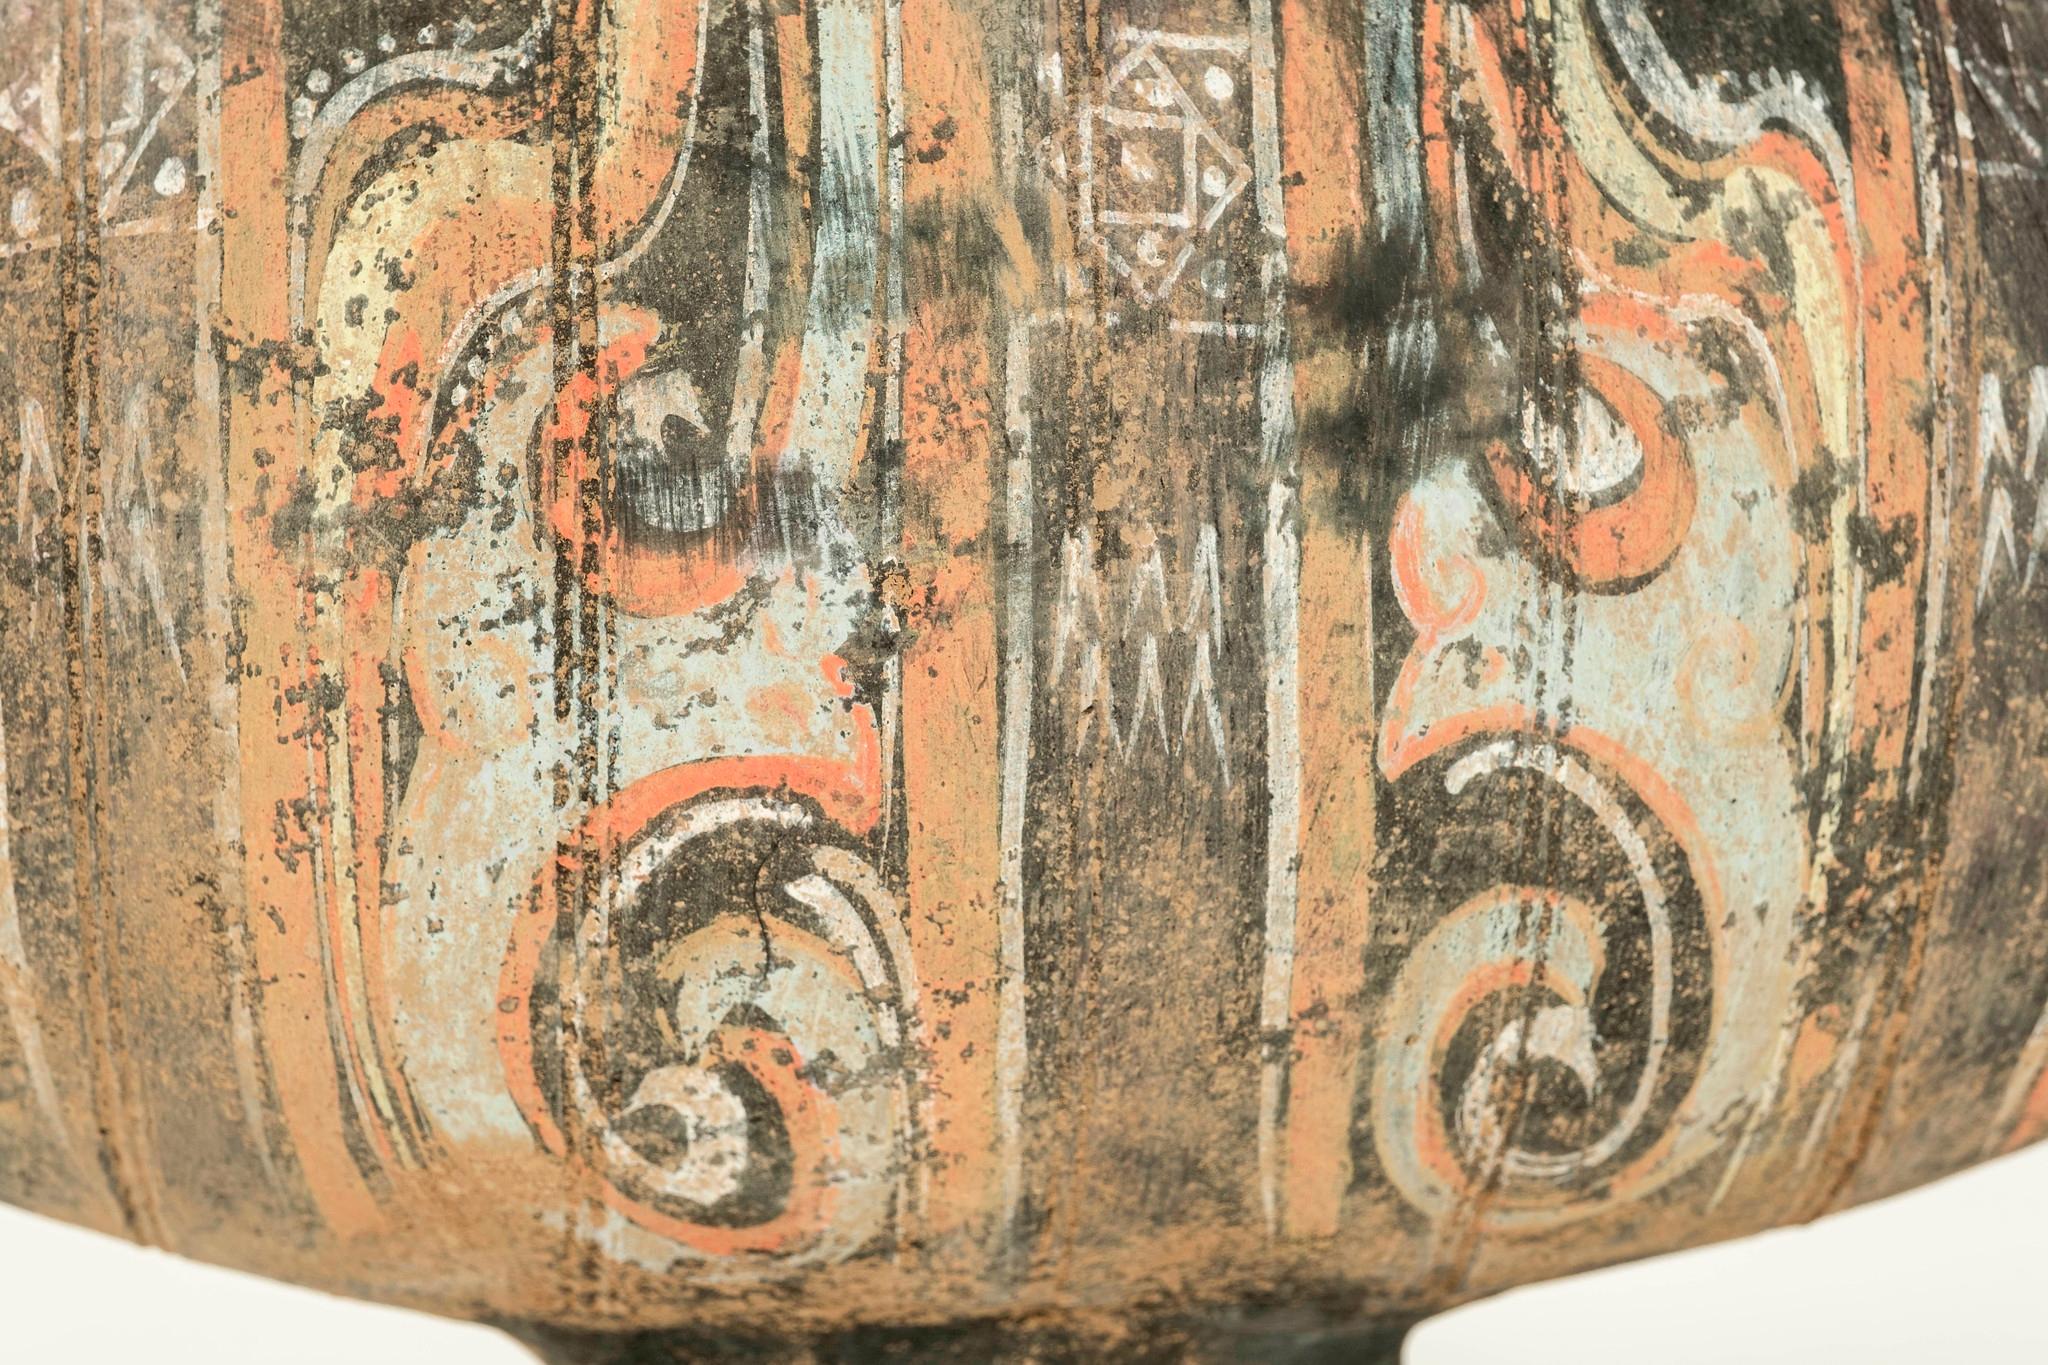 Han Dynasty Earthware Cocoon Jar Circa 206 BC-220 AD 1